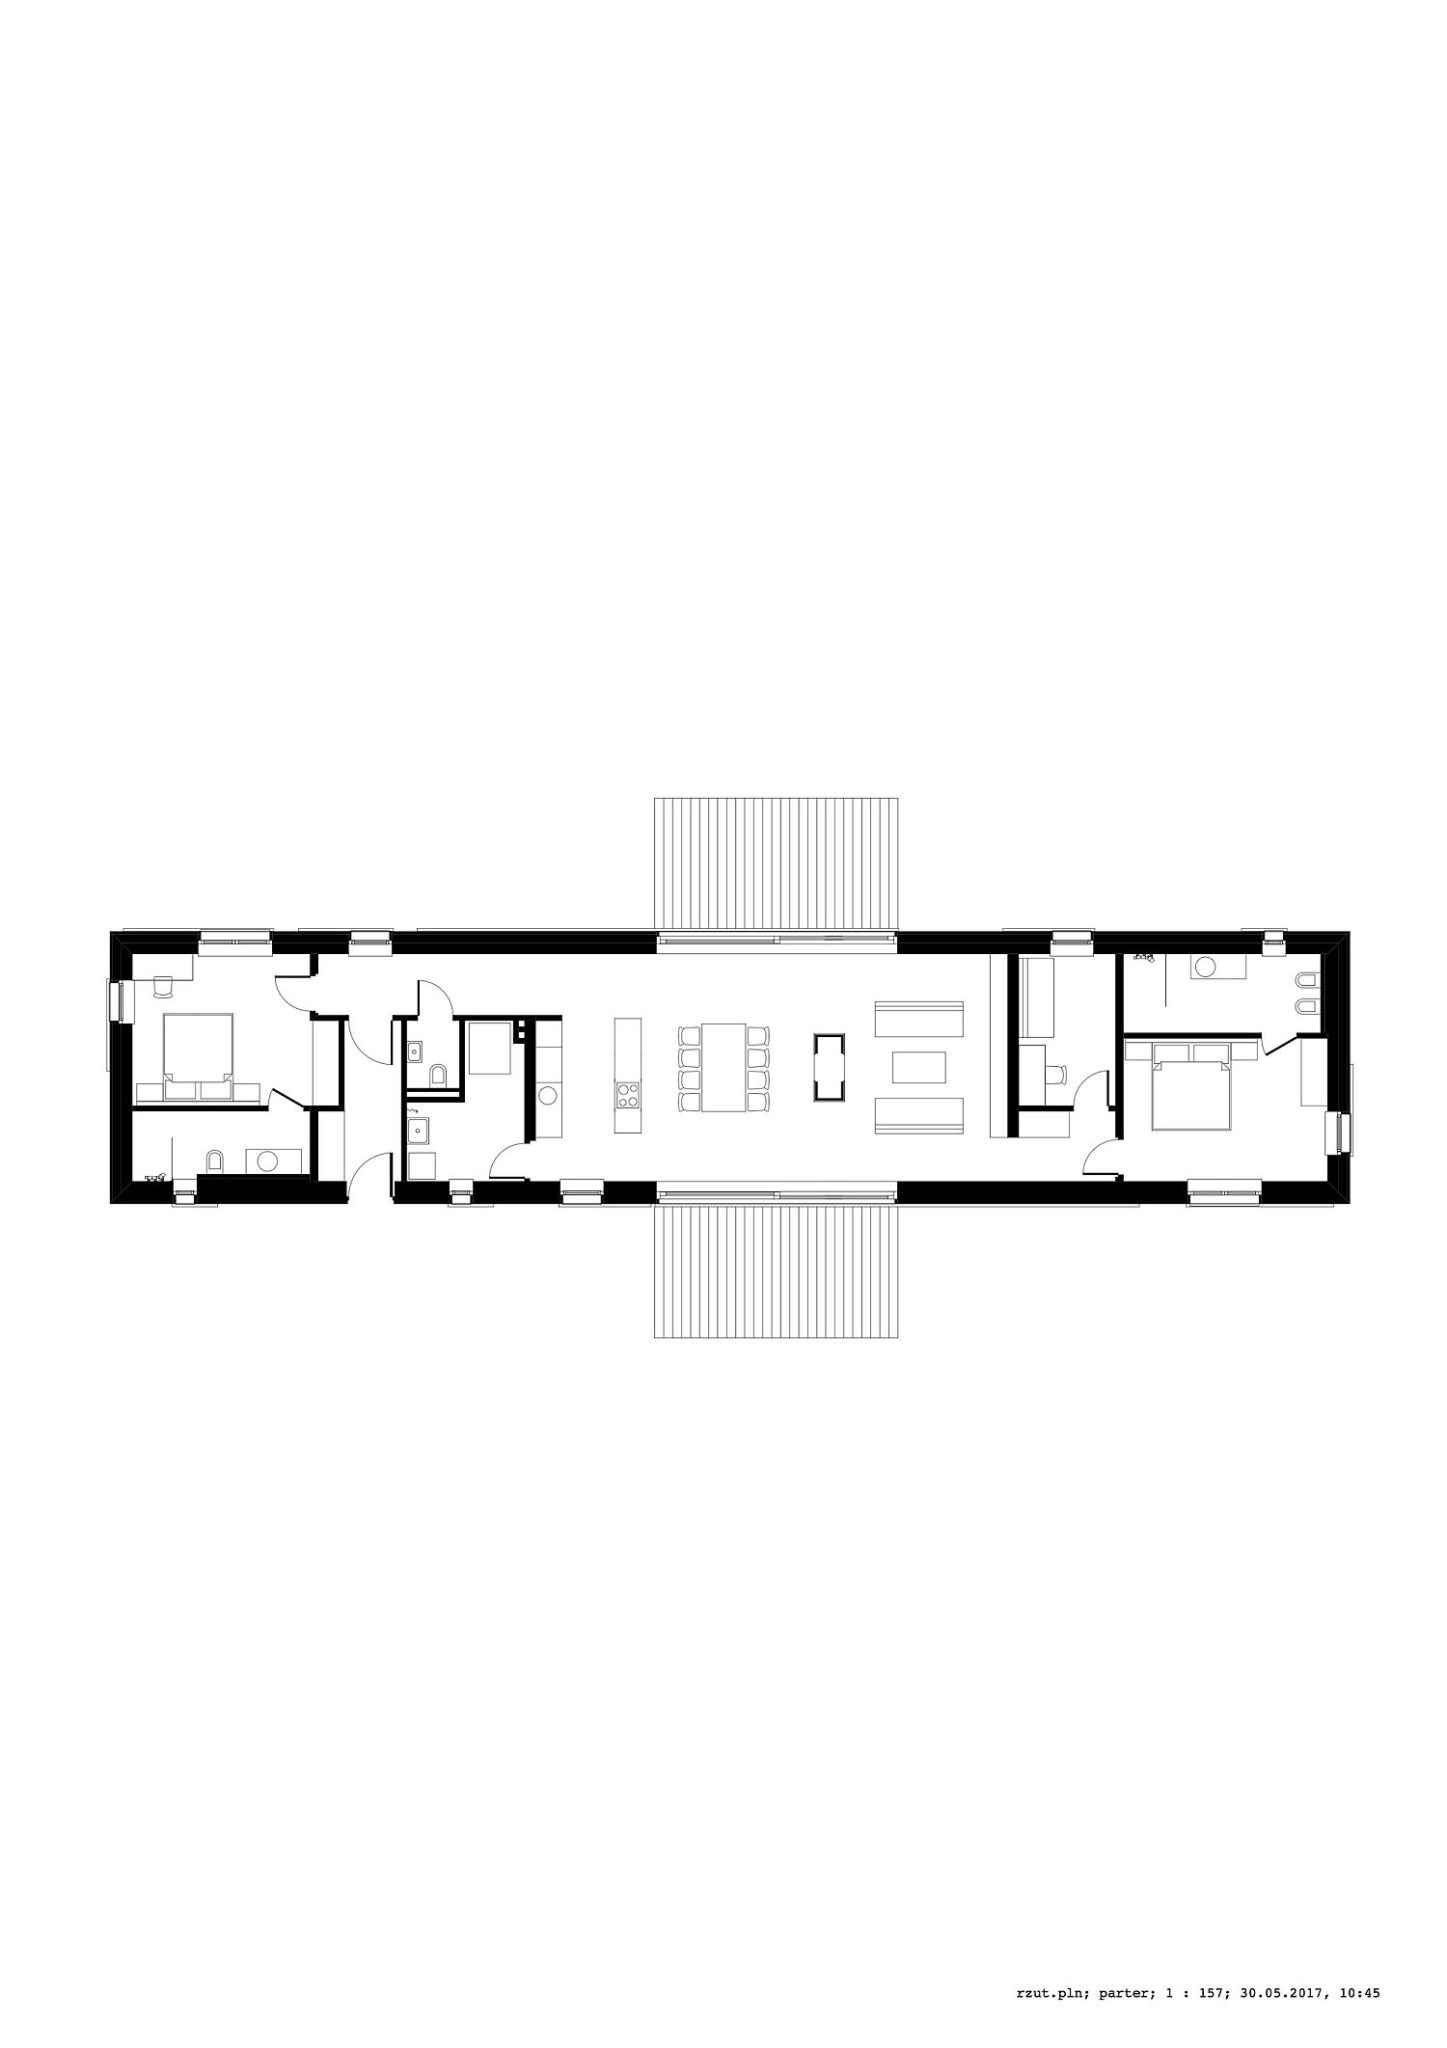 Floor plan of House 01 in Nowa Górka, Poland